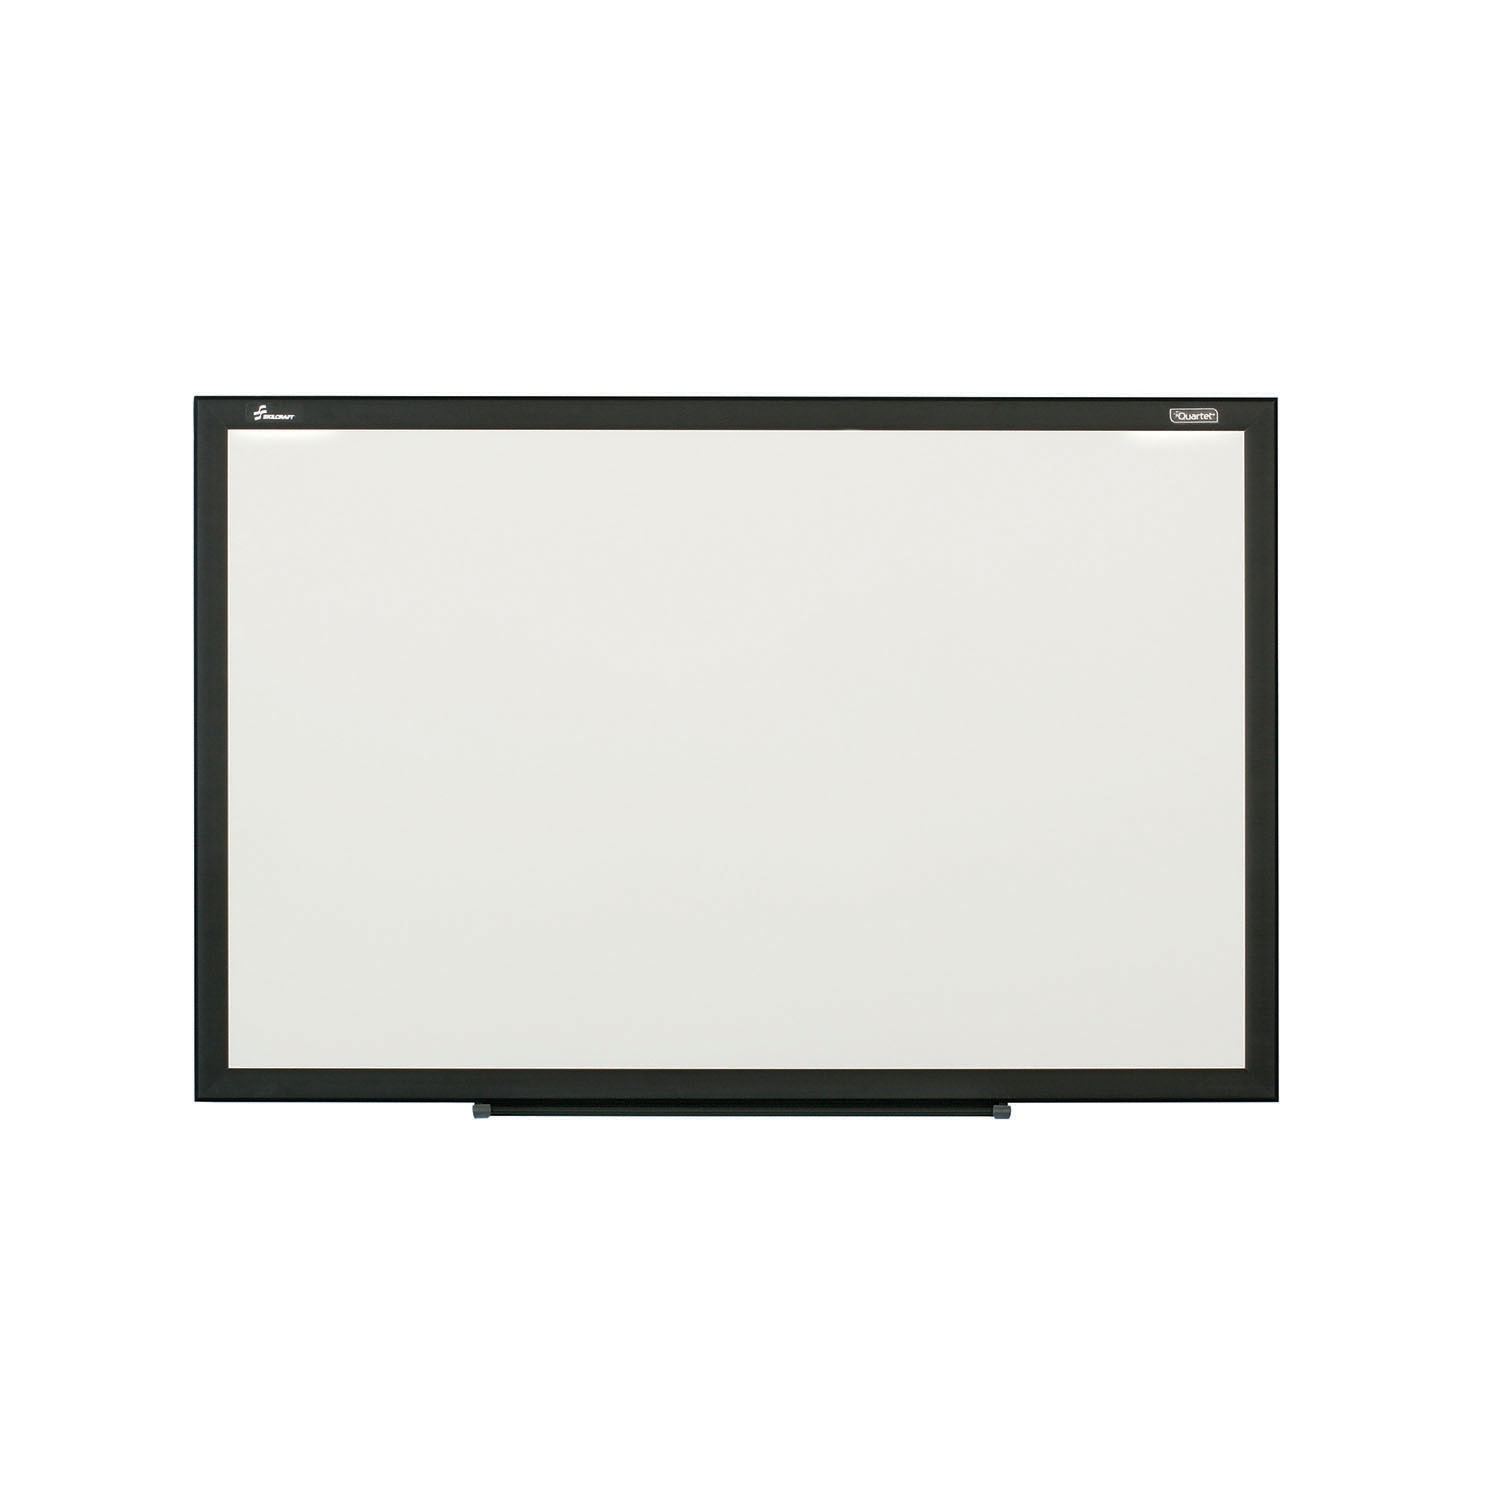 Dry Erase Whiteboard, Magnetic Porcelain Surface, Black Aluminum Frame, 4 x 3